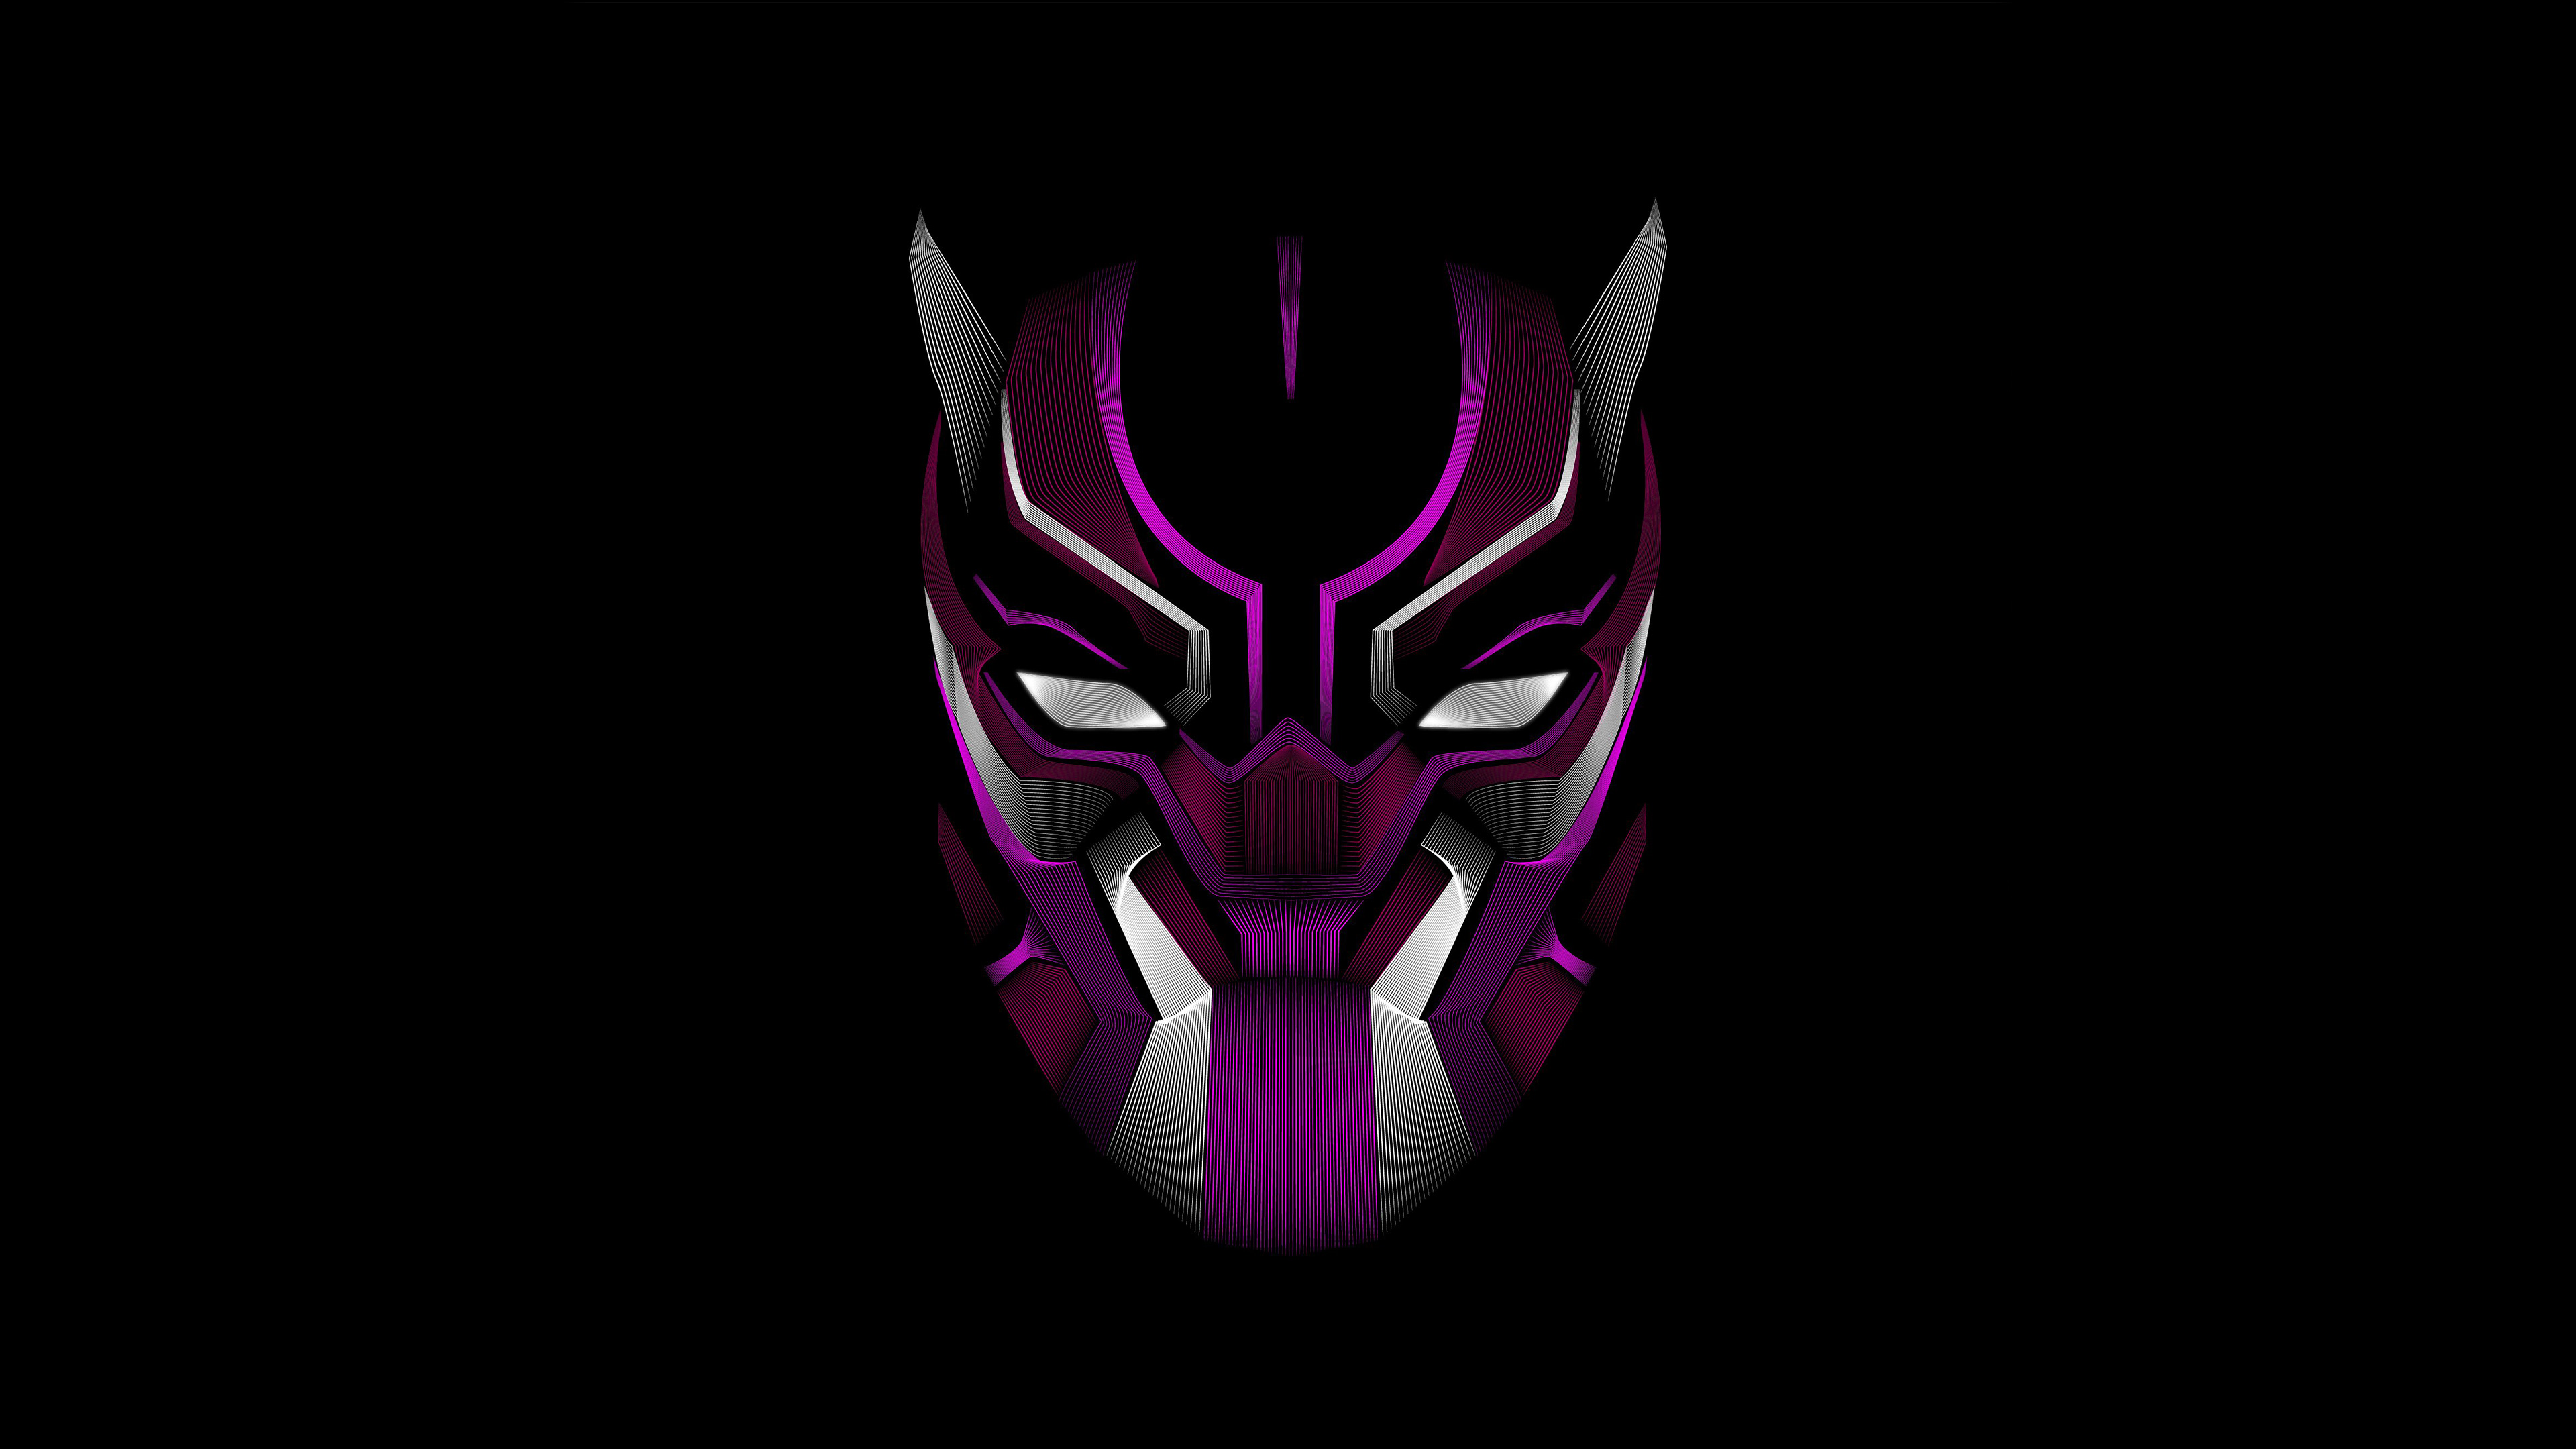  Black  Panther  Mask  Minimalism 4k HD Superheroes 4k 